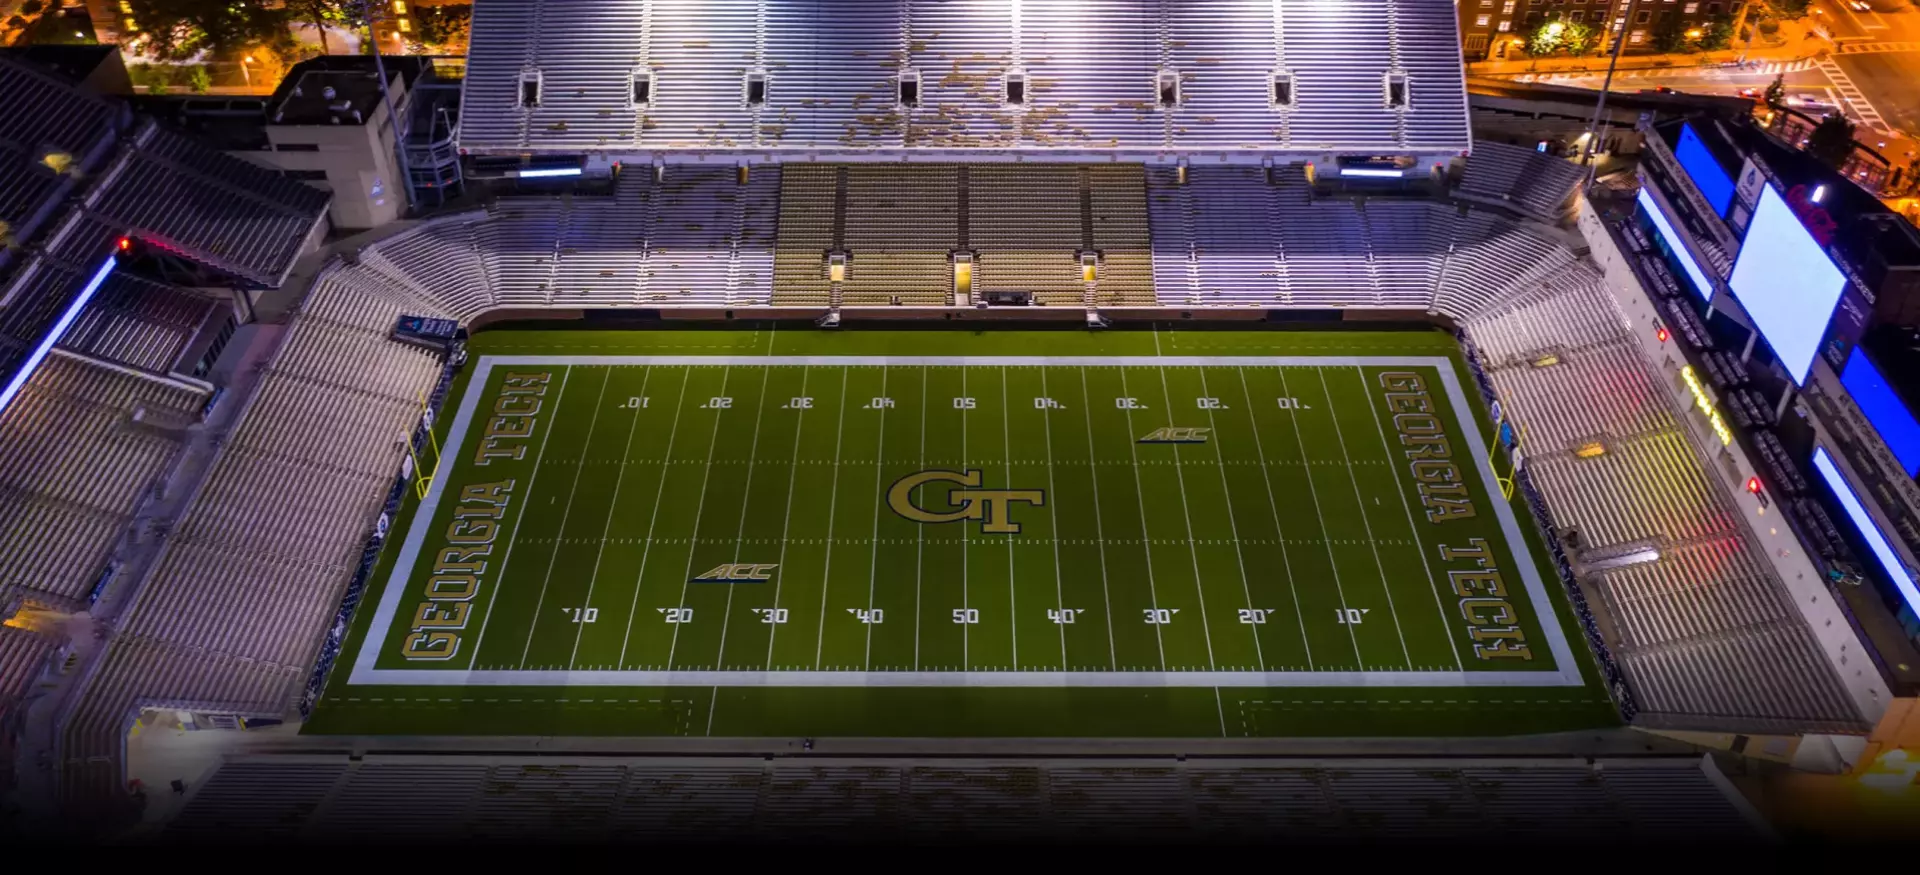 An overhead view of Bobby Dodd Stadium at Hyundai Field at night.